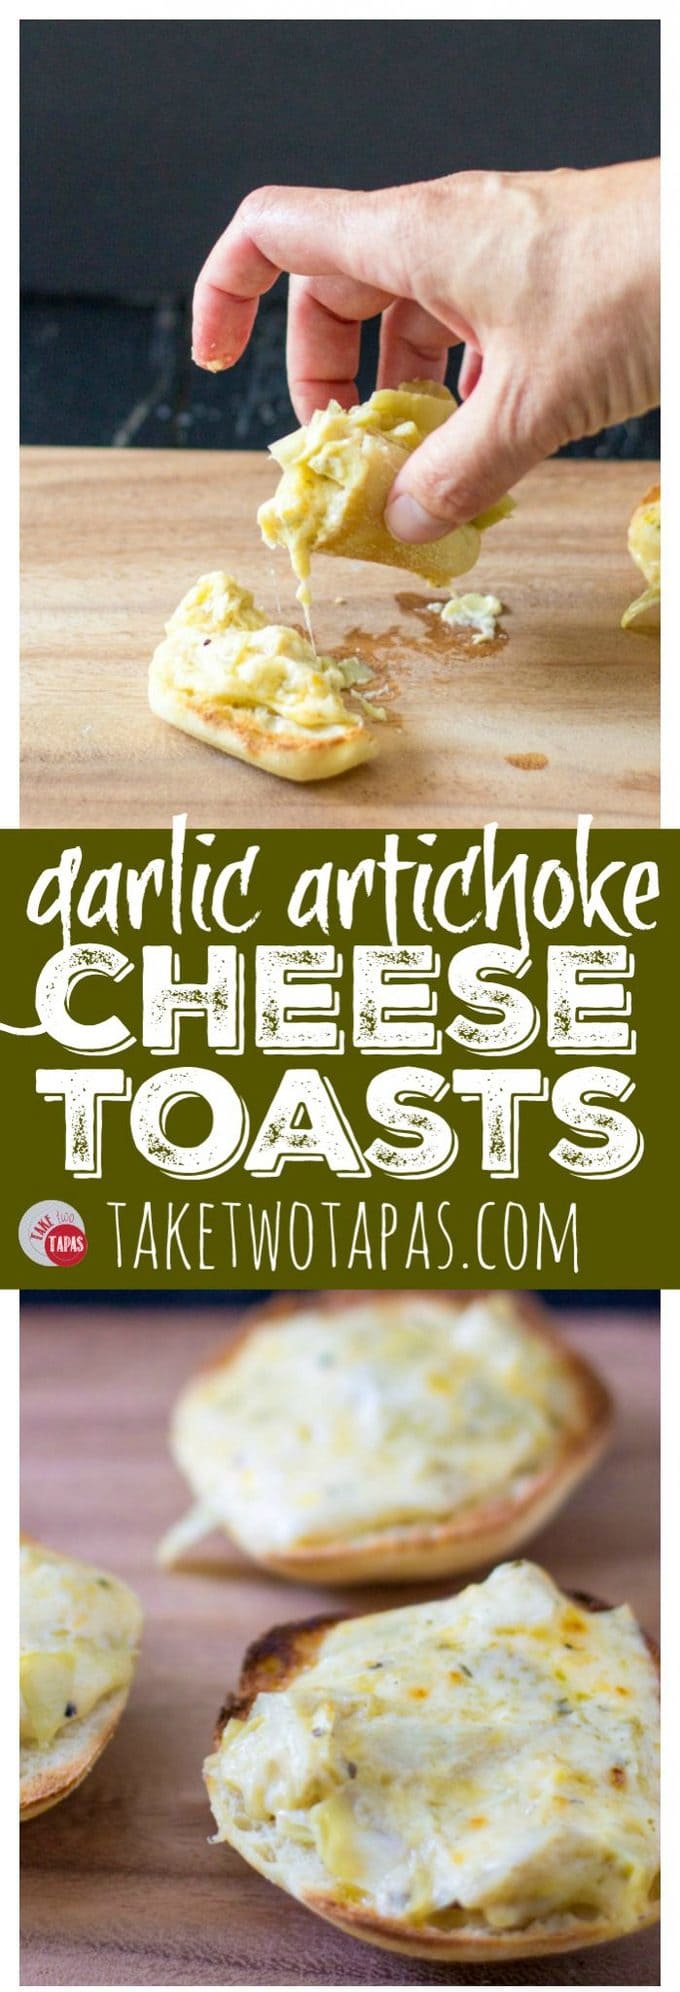 Garlic Artichoke Cheese Toasts | Take Two Tapas | #GarlicBread #Artichokes #Garlic #Toasts #CheeseToastRecipe